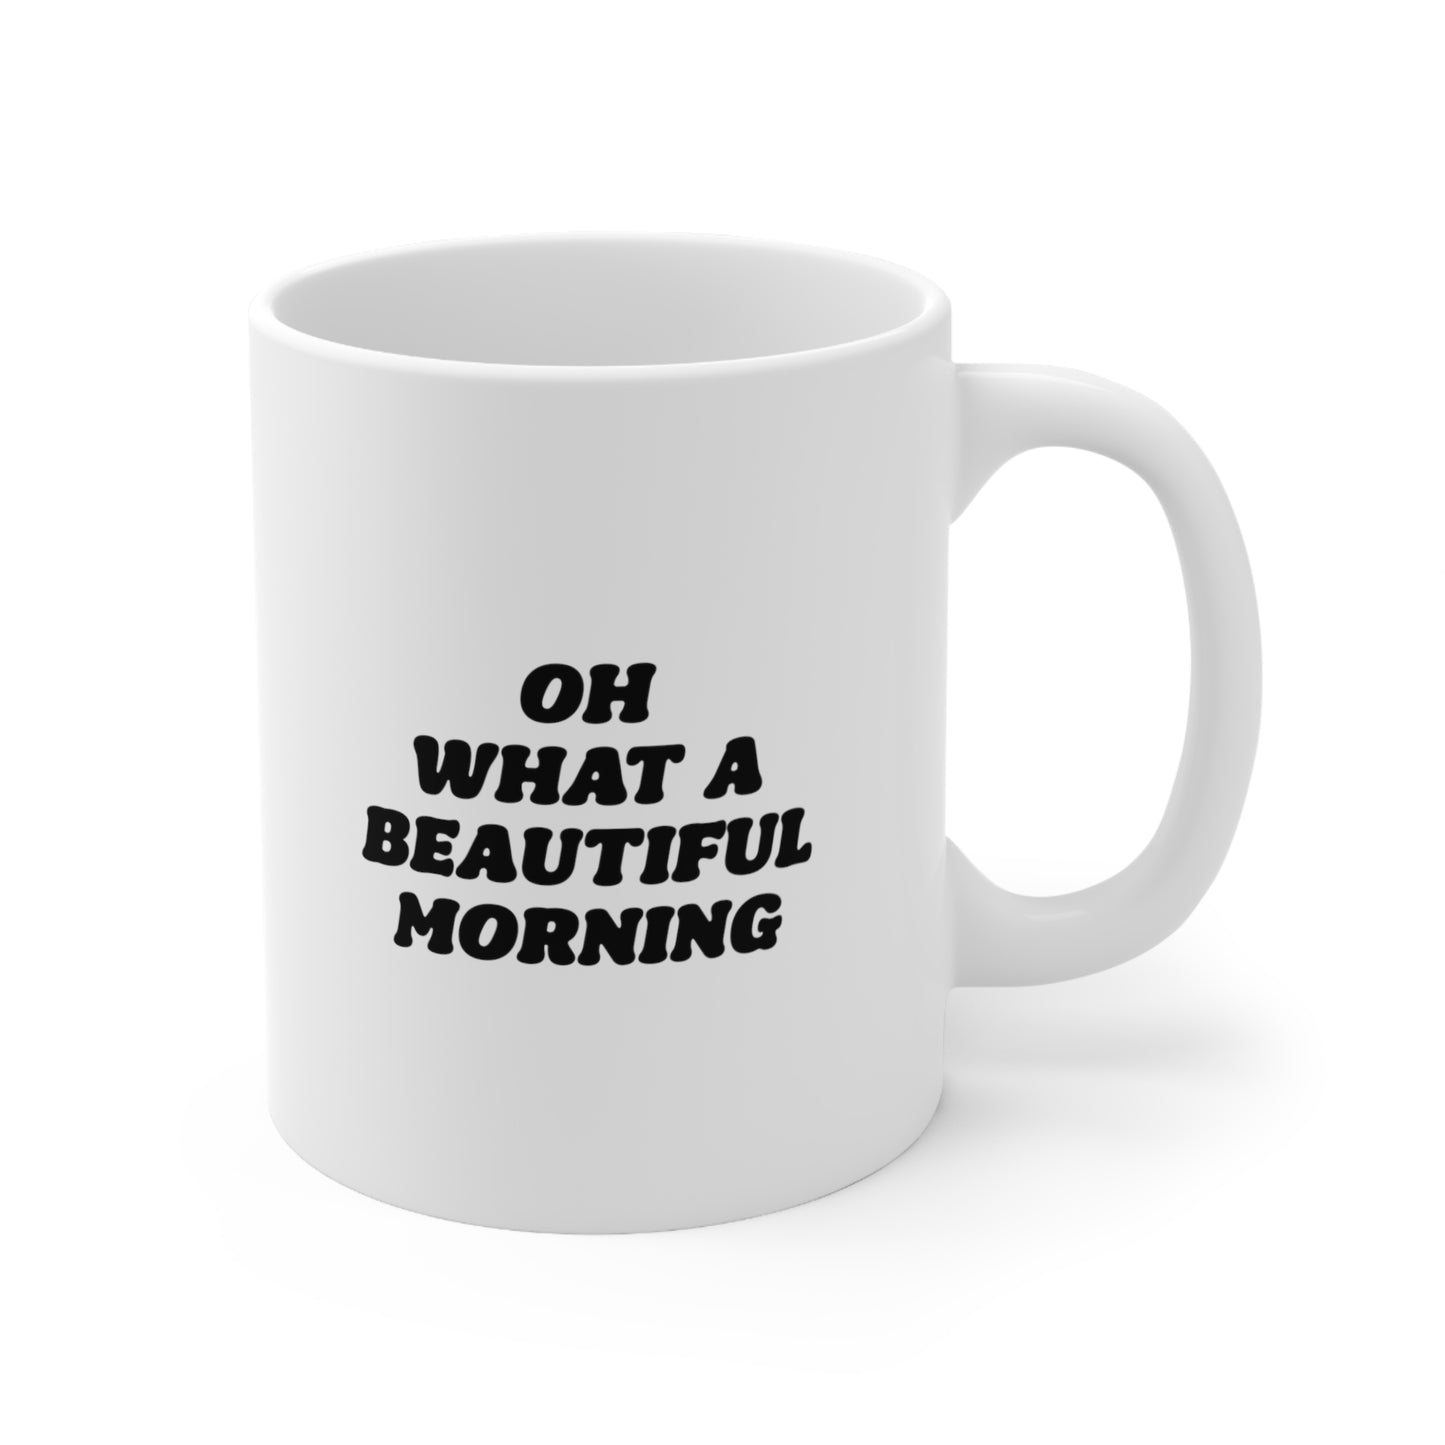 Oh what a beautiful morning Coffee Mug 11oz